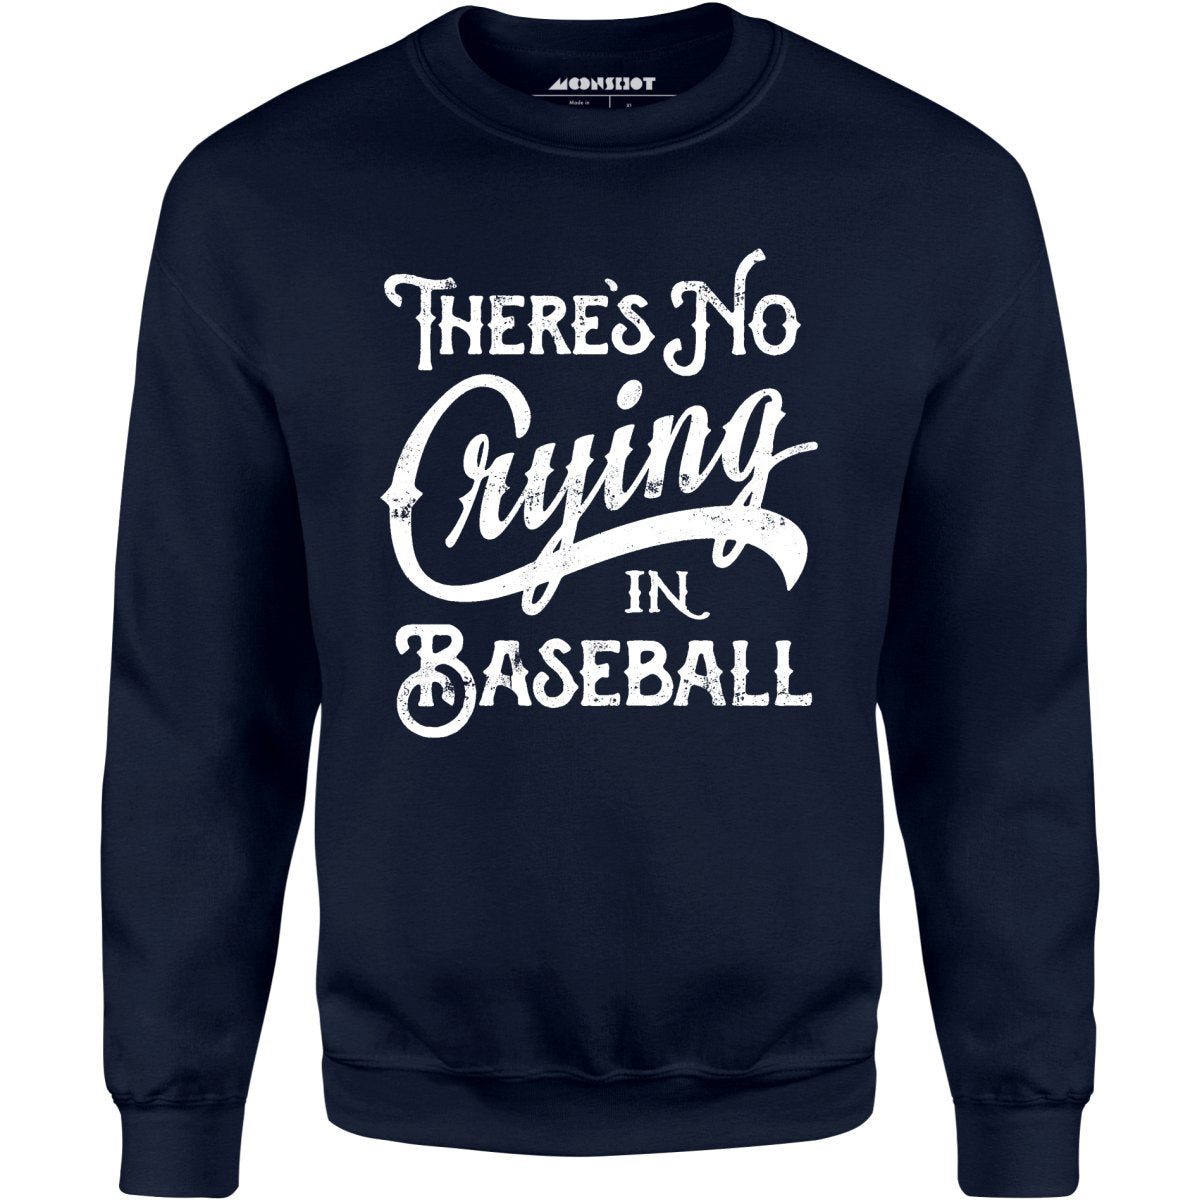 There's No Crying in Baseball - Unisex Sweatshirt